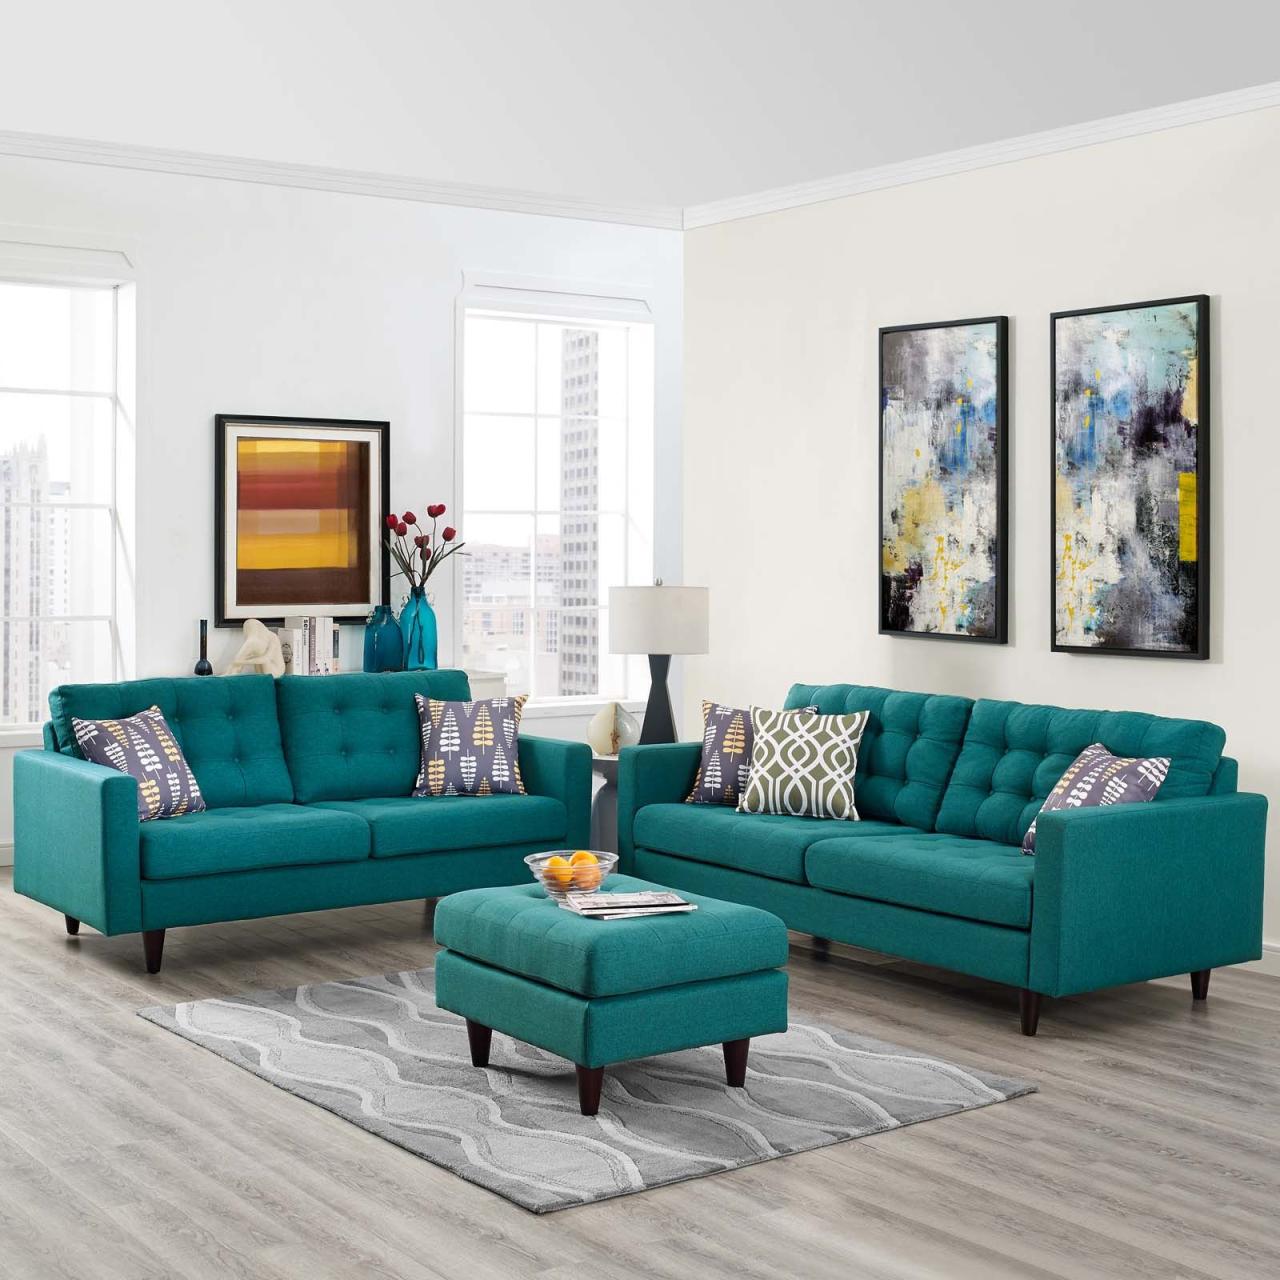 Teal living room adair set furniture